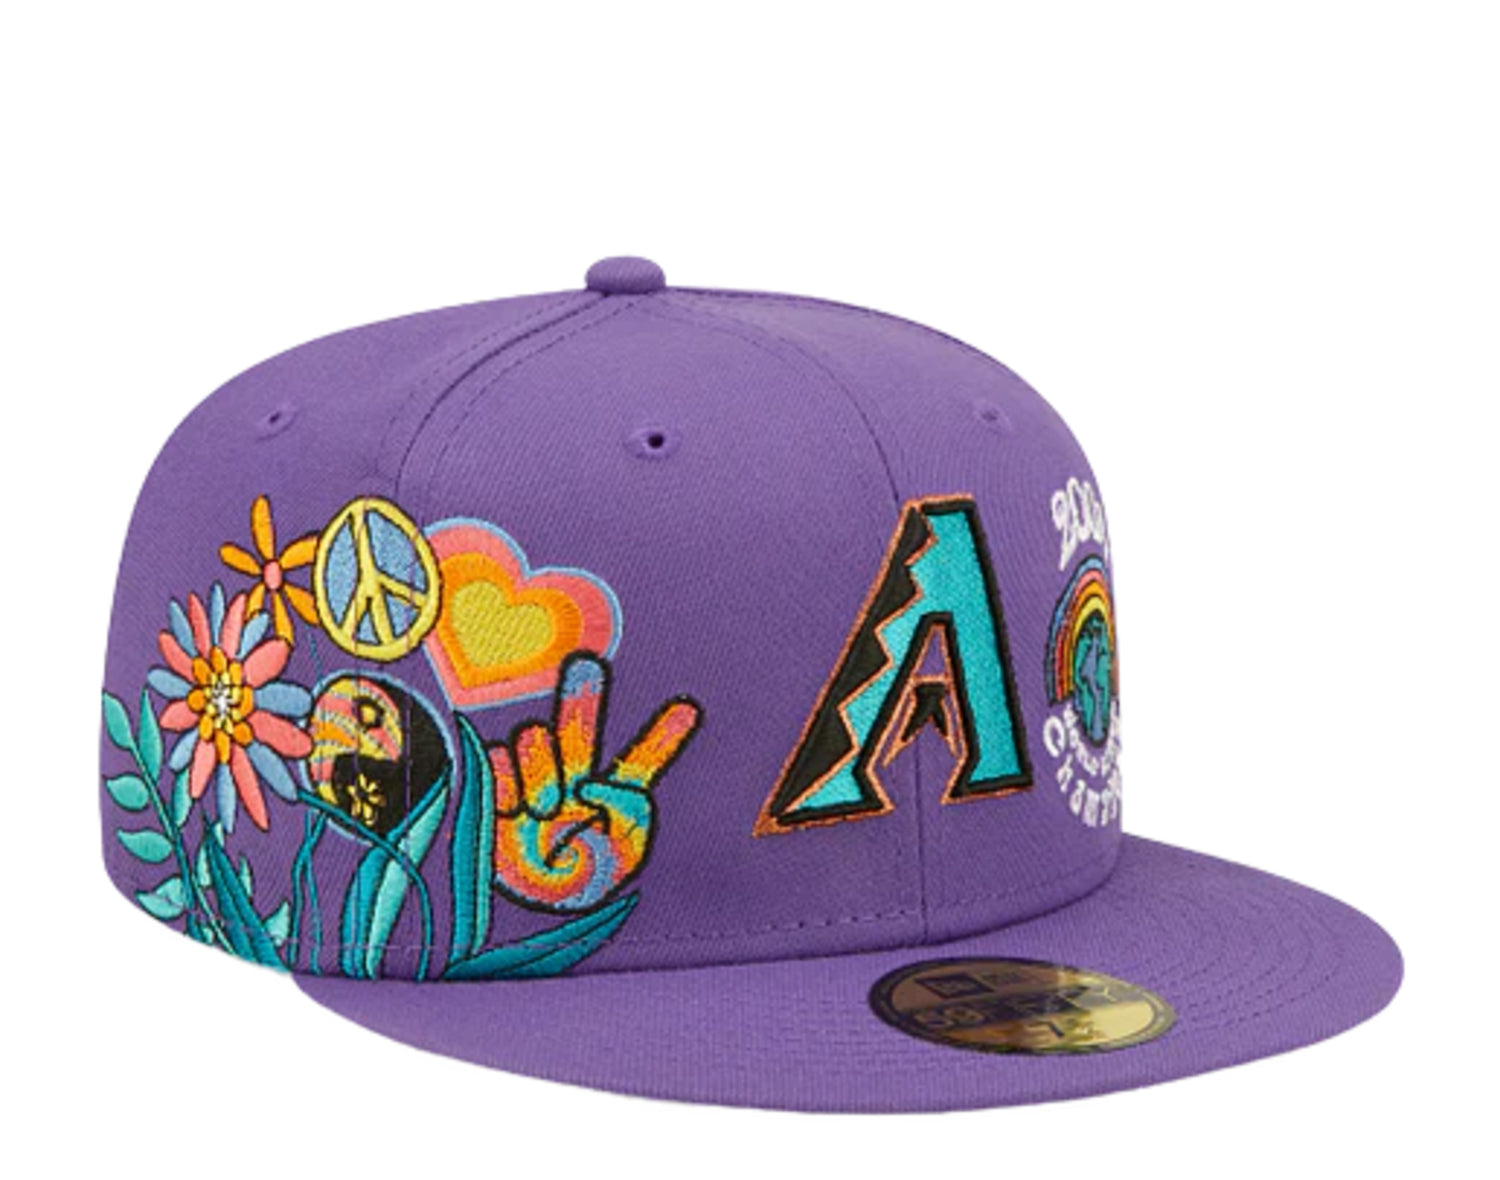 New Era 59Fifty MLB Arizona Diamondbacks Groovy Fitted Hat